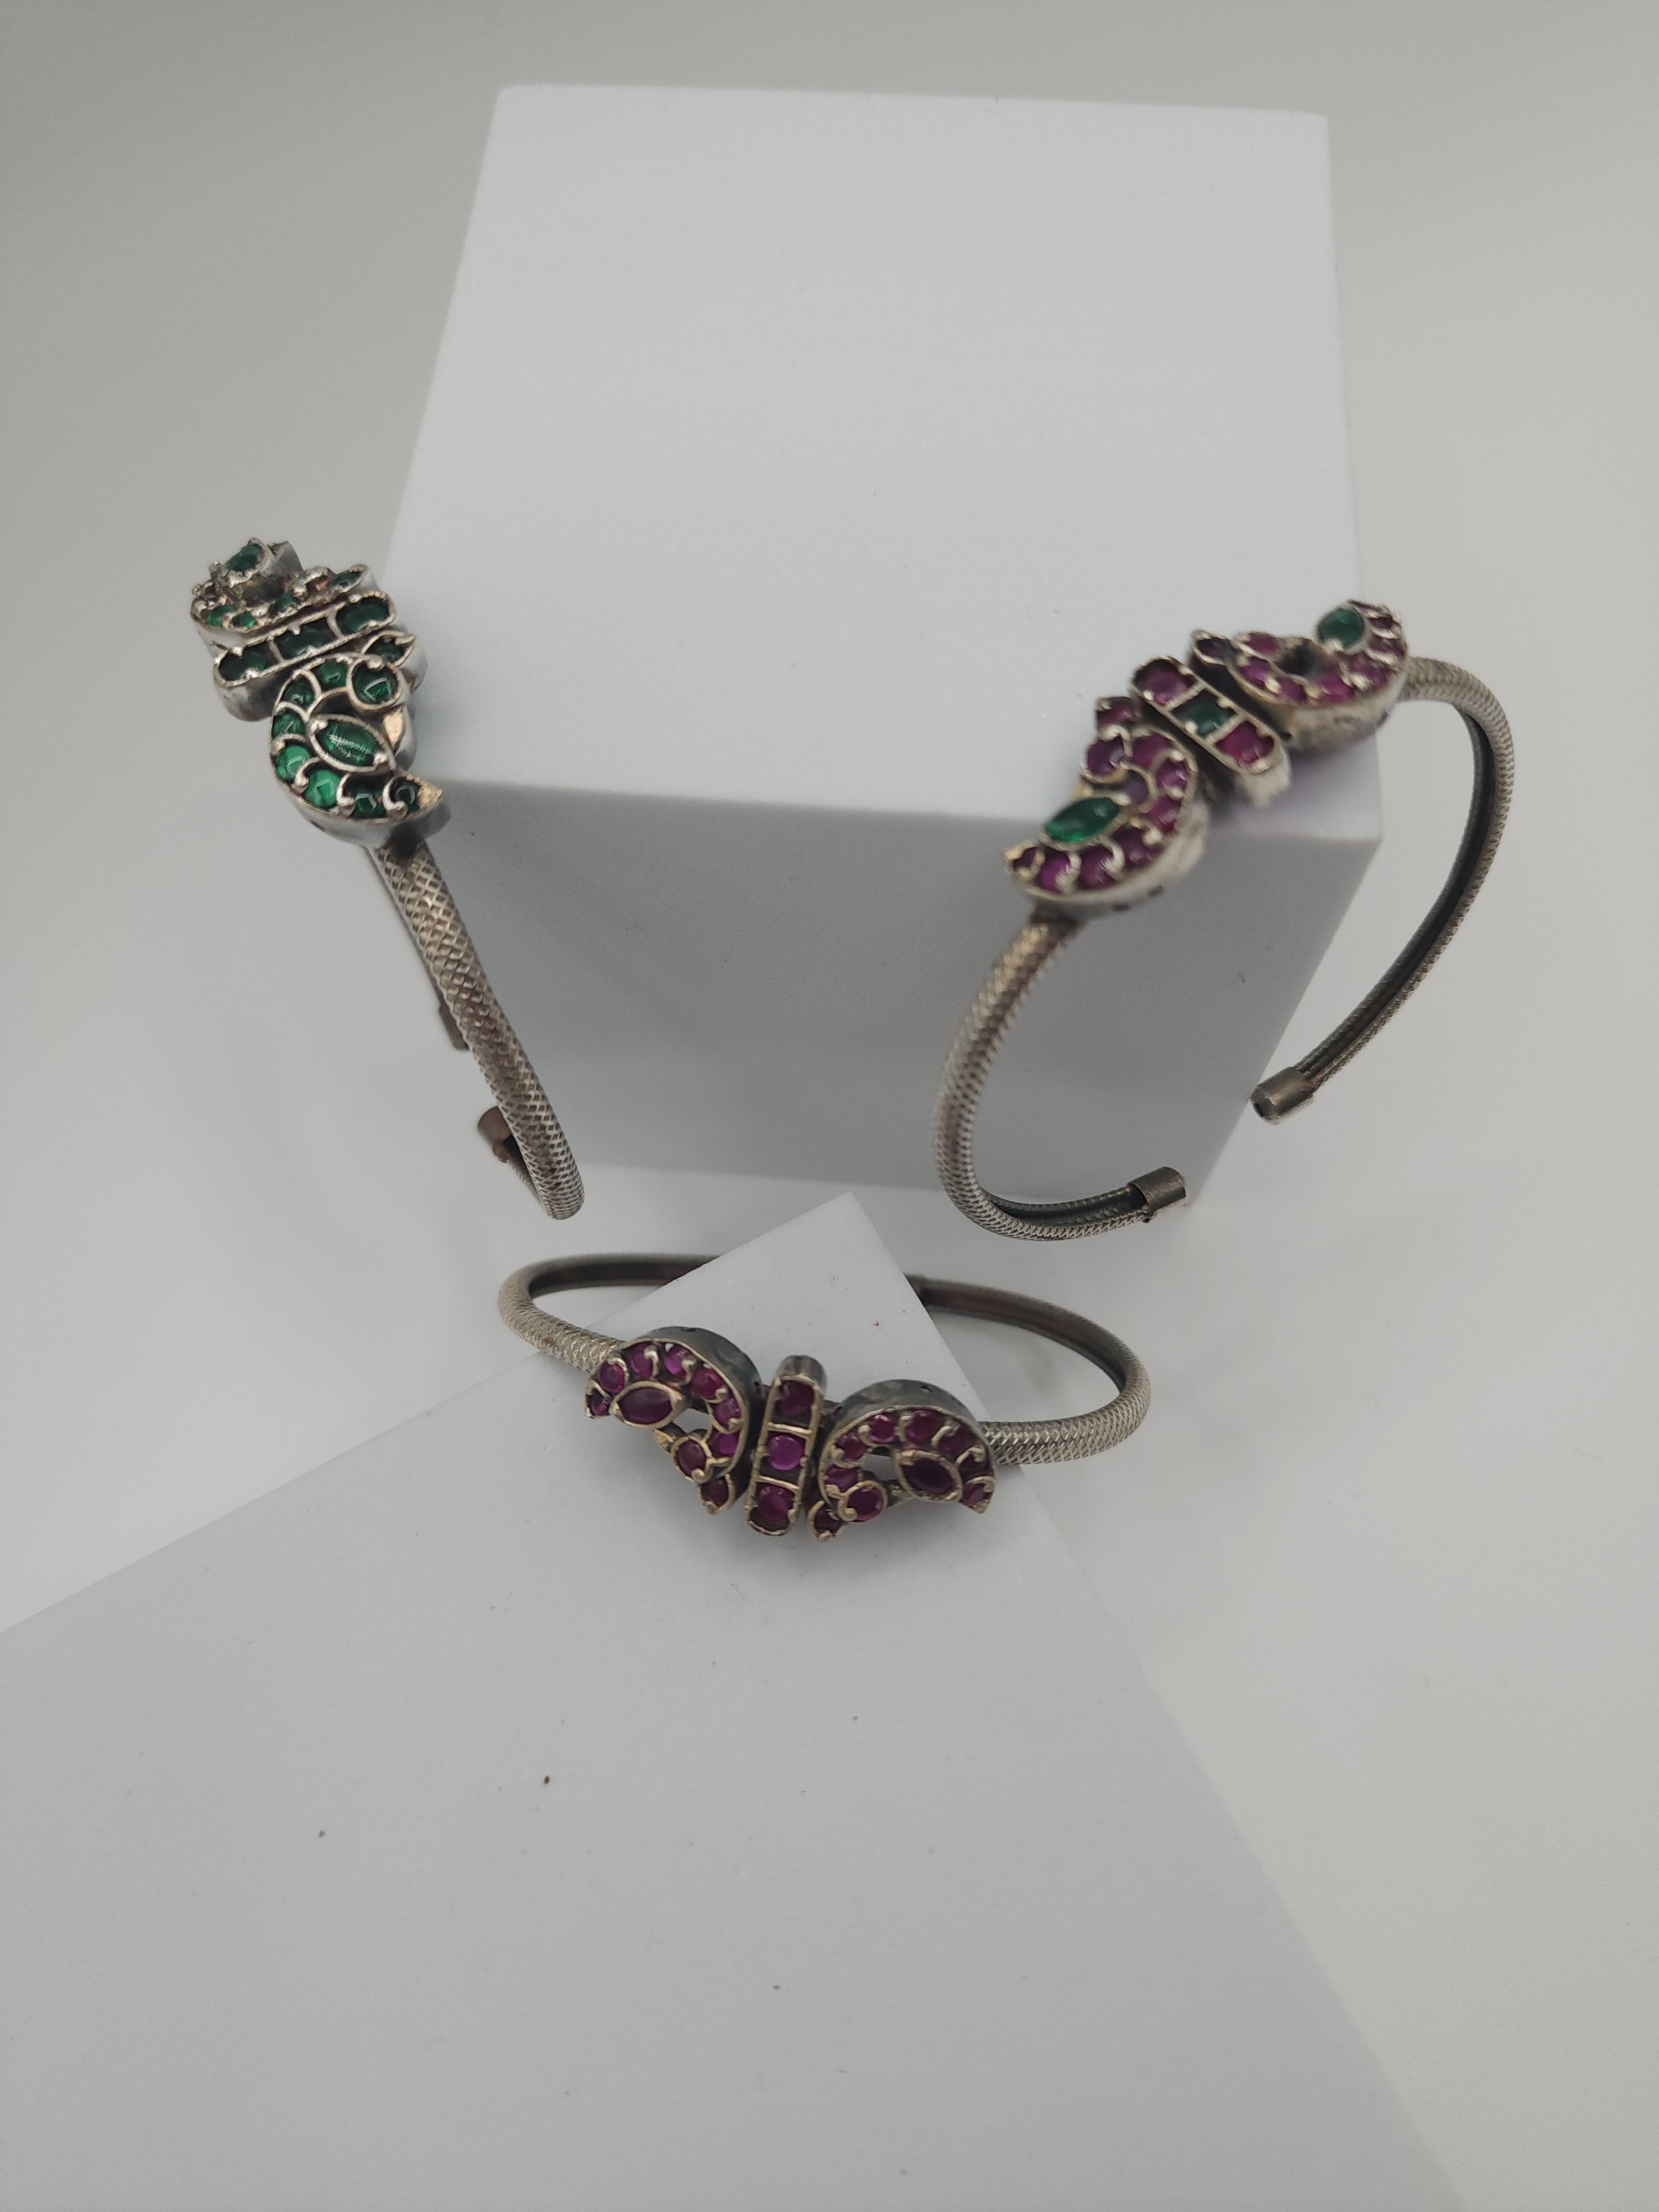 kemp silveralike bracelet/ bangles